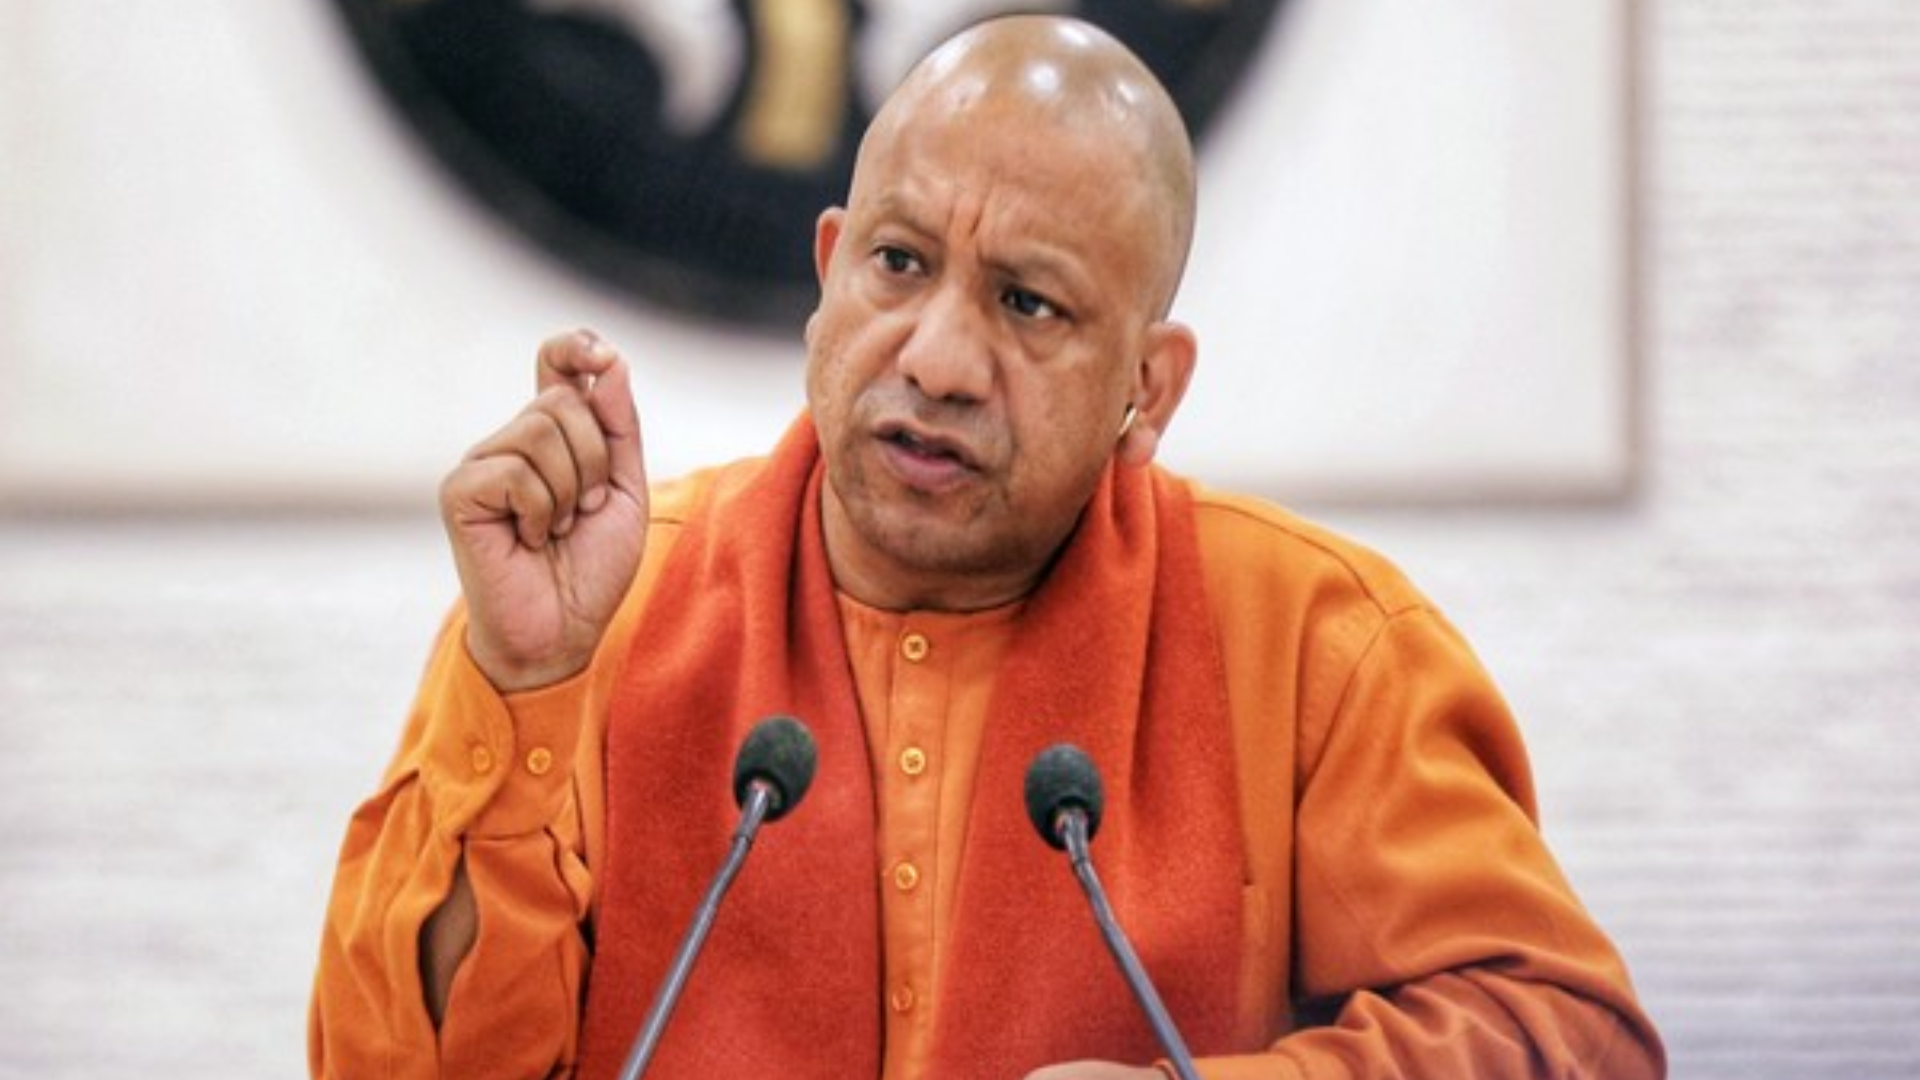 CM Yogi Connects with Public Concerns Through ‘Janta Darshan’ at Gorakhnath Temple